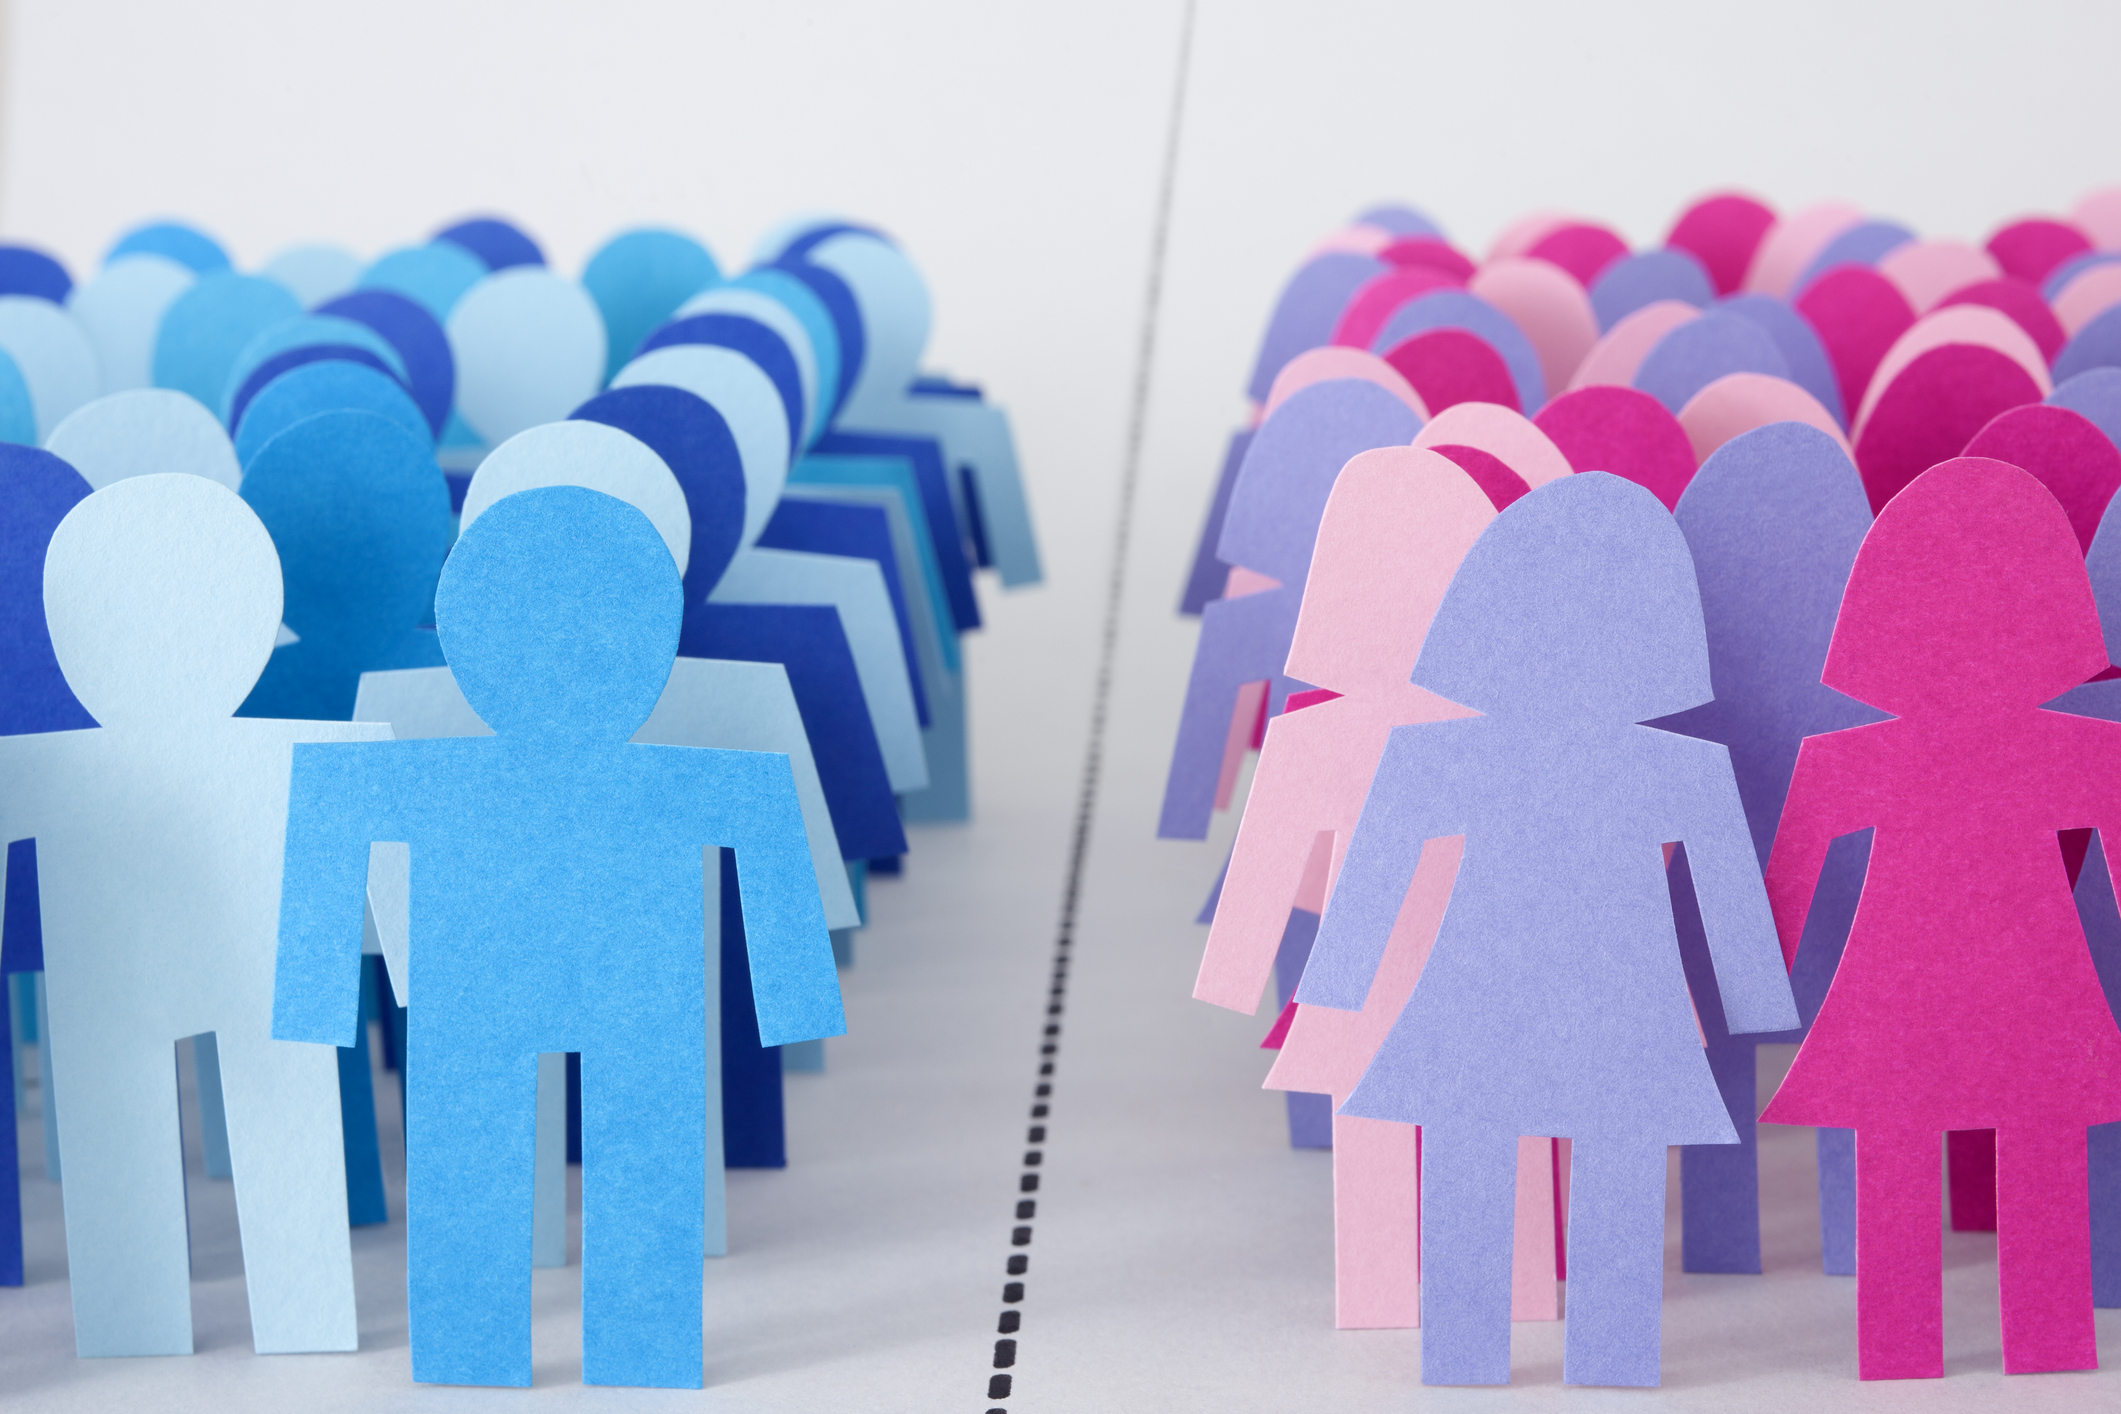 Subtle Forms Of Gender Discrimination In The Workplace